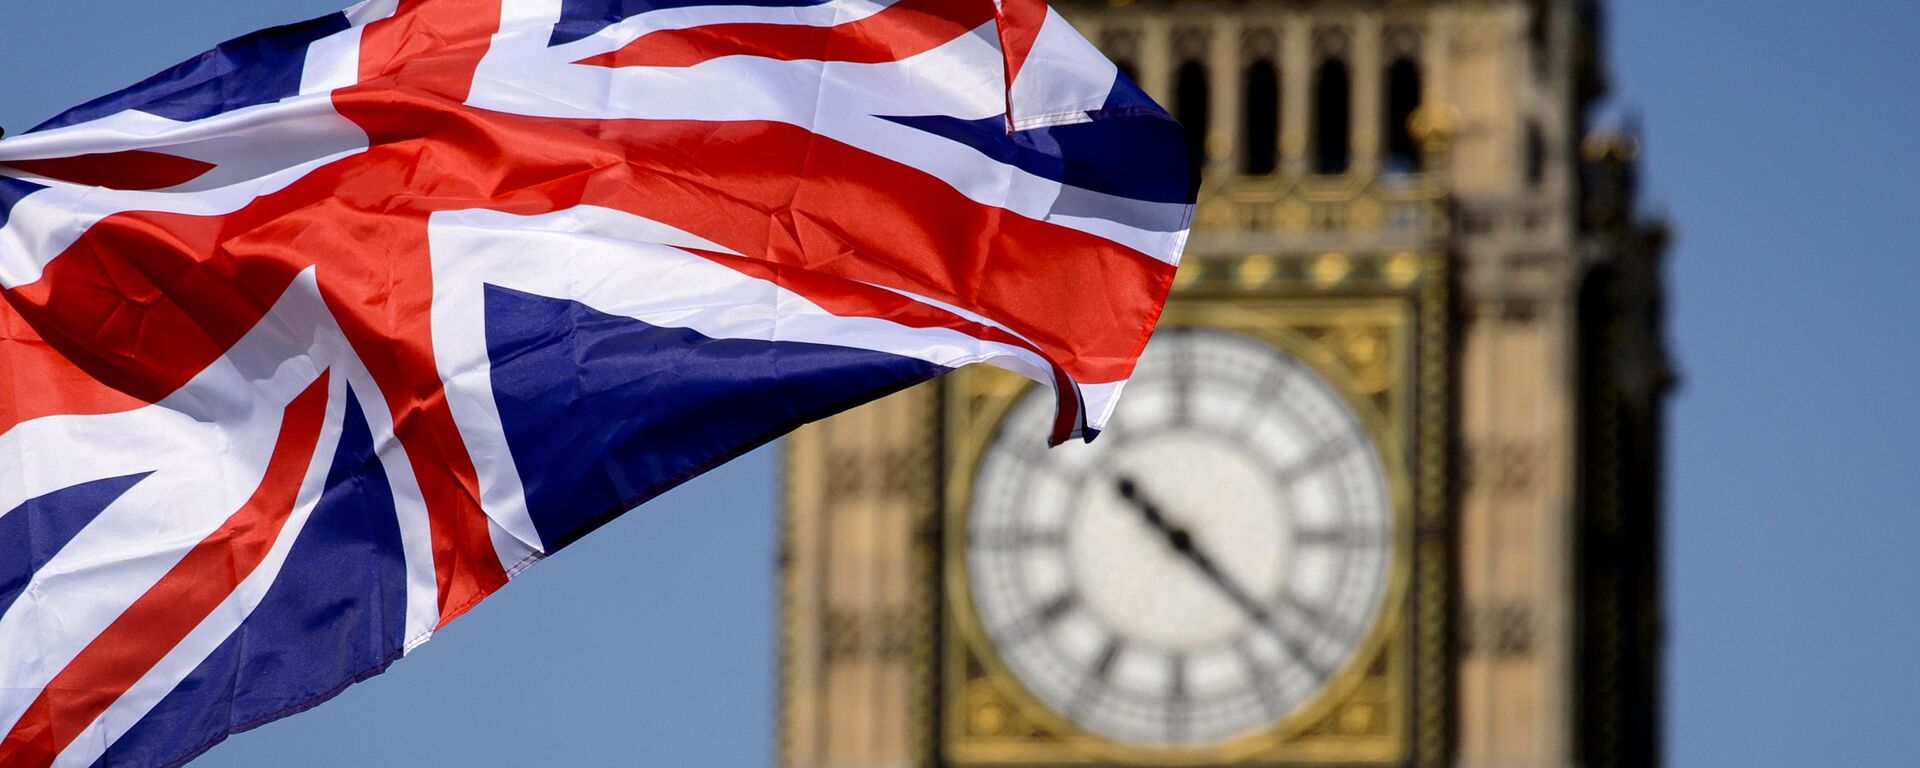 Британский флаг на фоне Биг-Бена в Лондоне - Sputnik Латвия, 1920, 20.05.2021